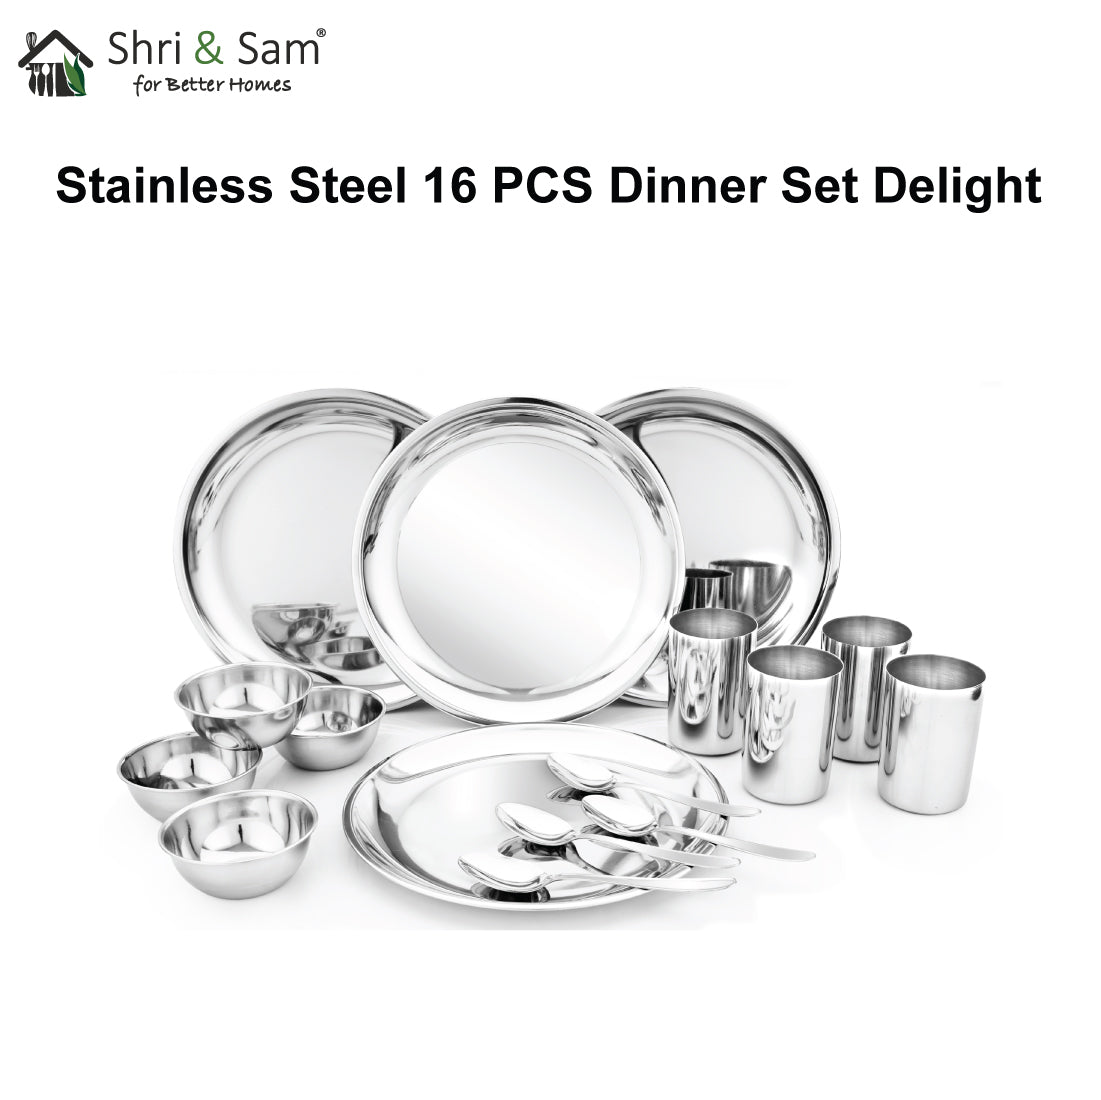 Stainless Steel 16 PCS Dinner Set (4 People) Delight